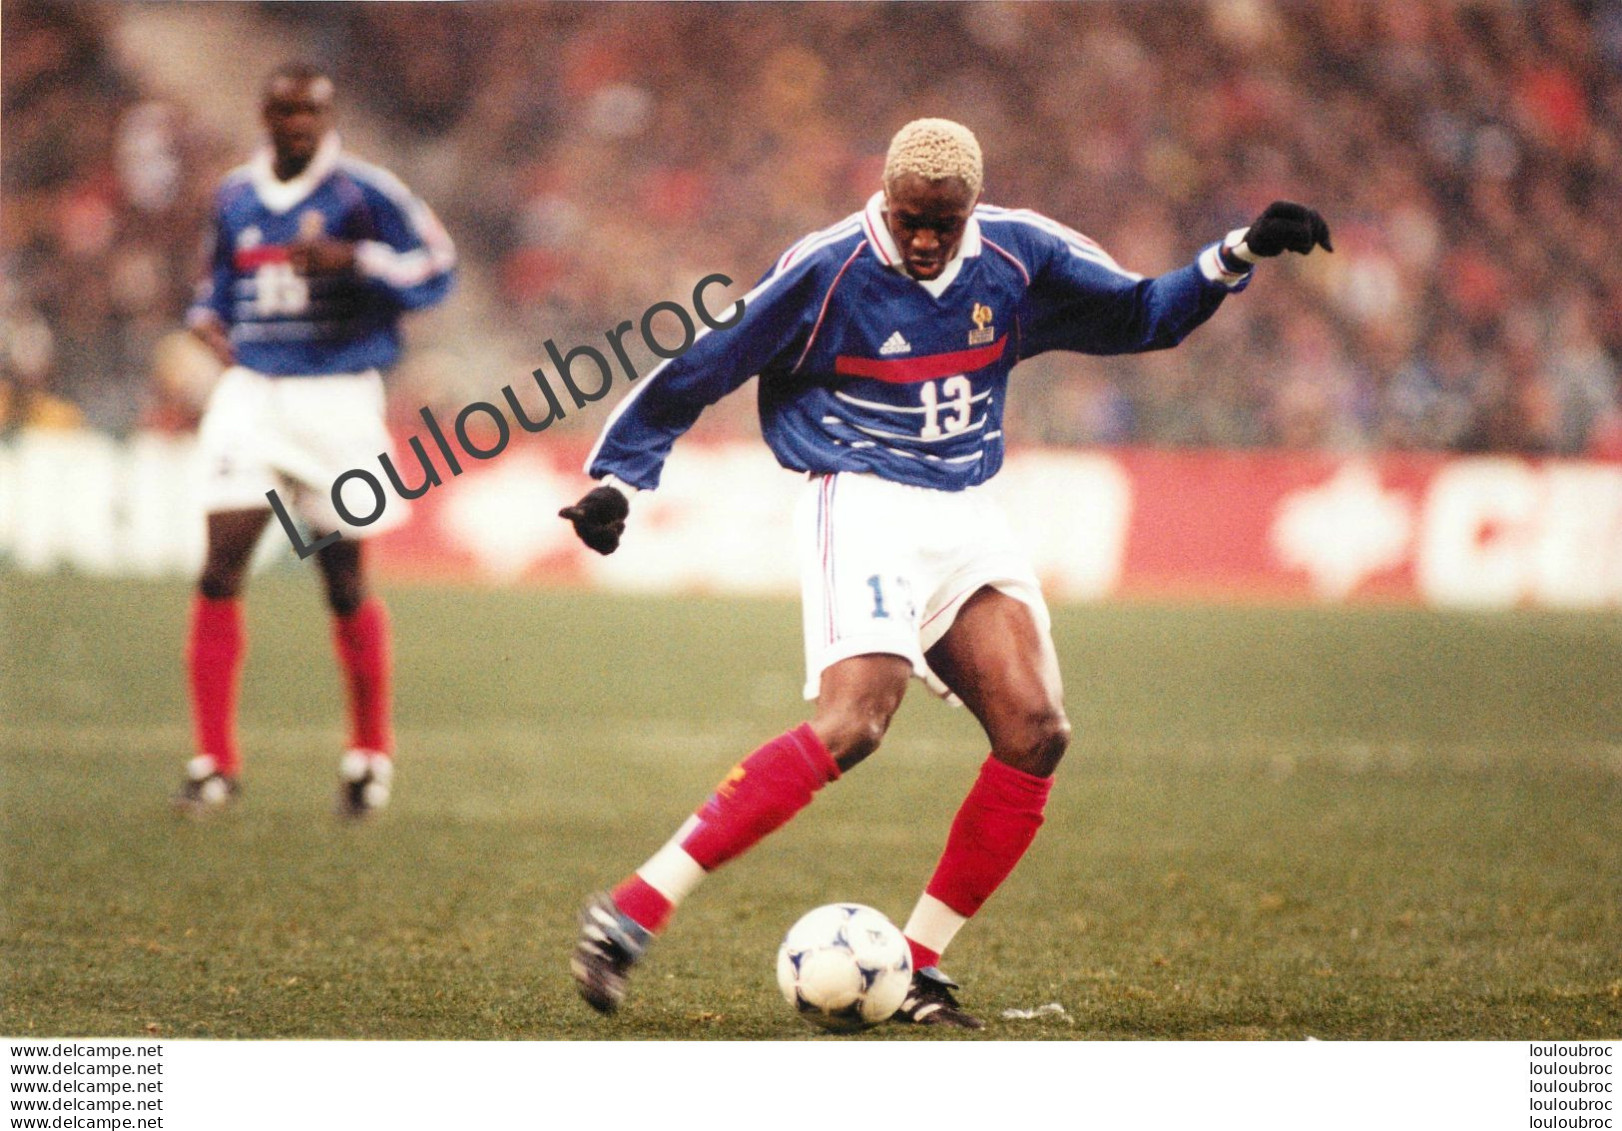 FOOTBALL FRANCE ESPAGNE 28/01/1998 PREMIER MATCH AU STADE DE FRANCE I. BA   PHOTO DE PRESSE AGENCE  ANGELI 27 X18cm Ref1 - Sport